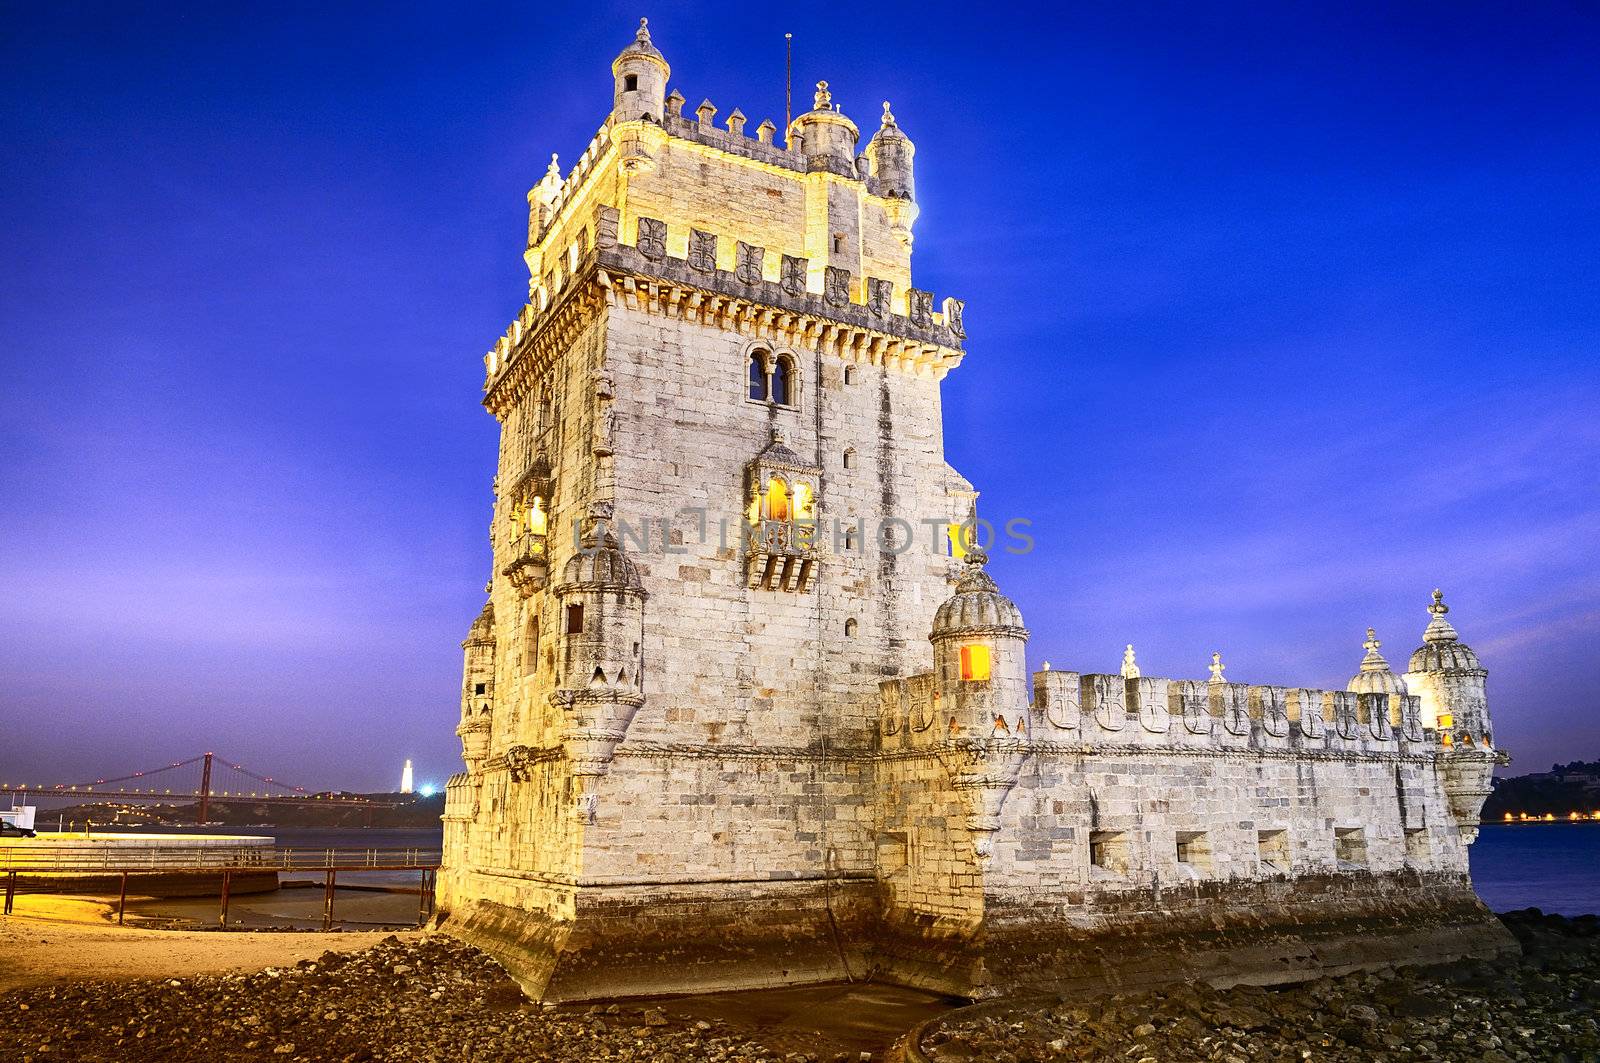 Belem tower in Lisbone city, Portugal